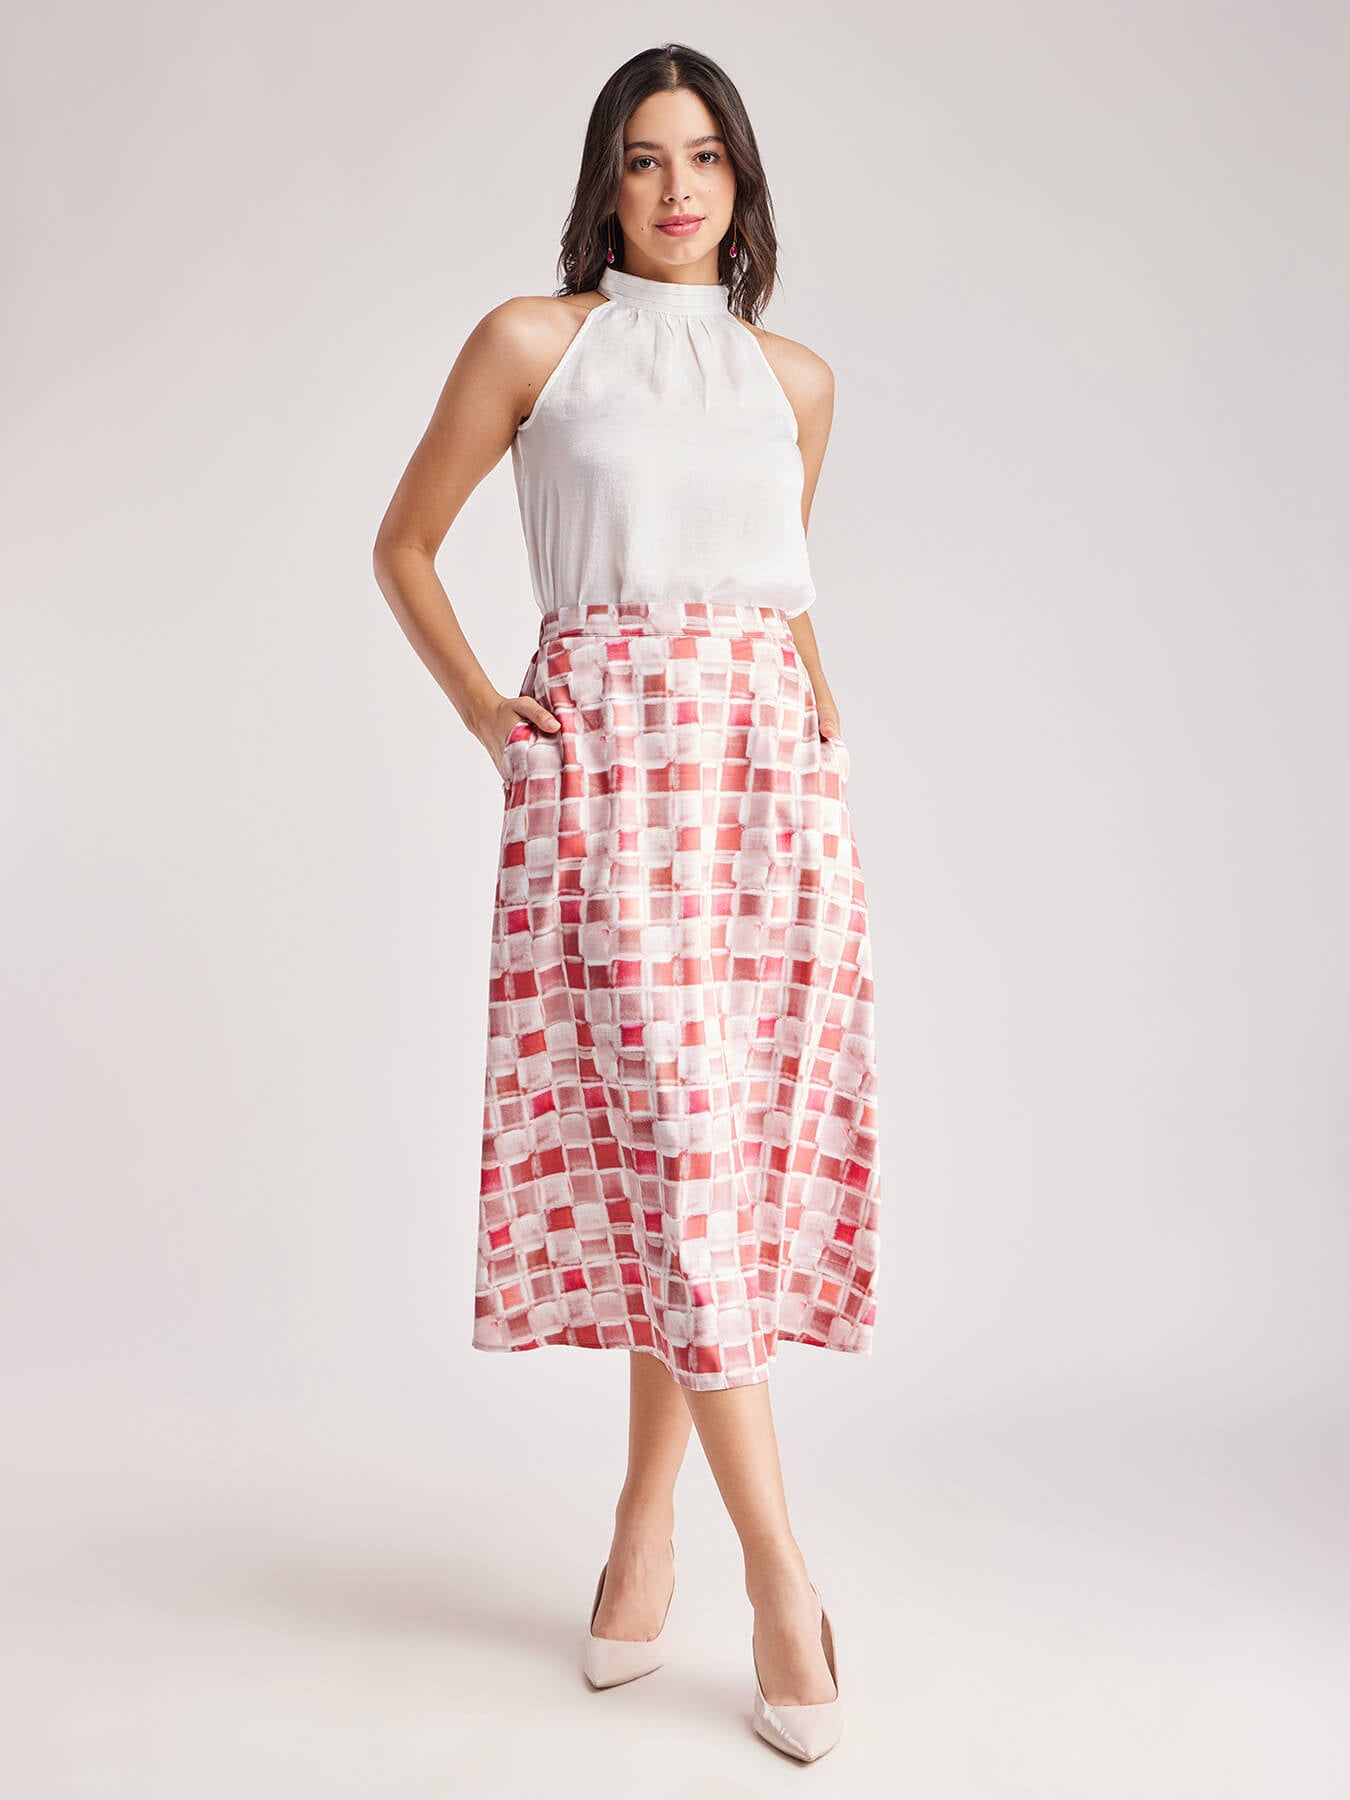 Geometric Print A-Line Skirt - Pink